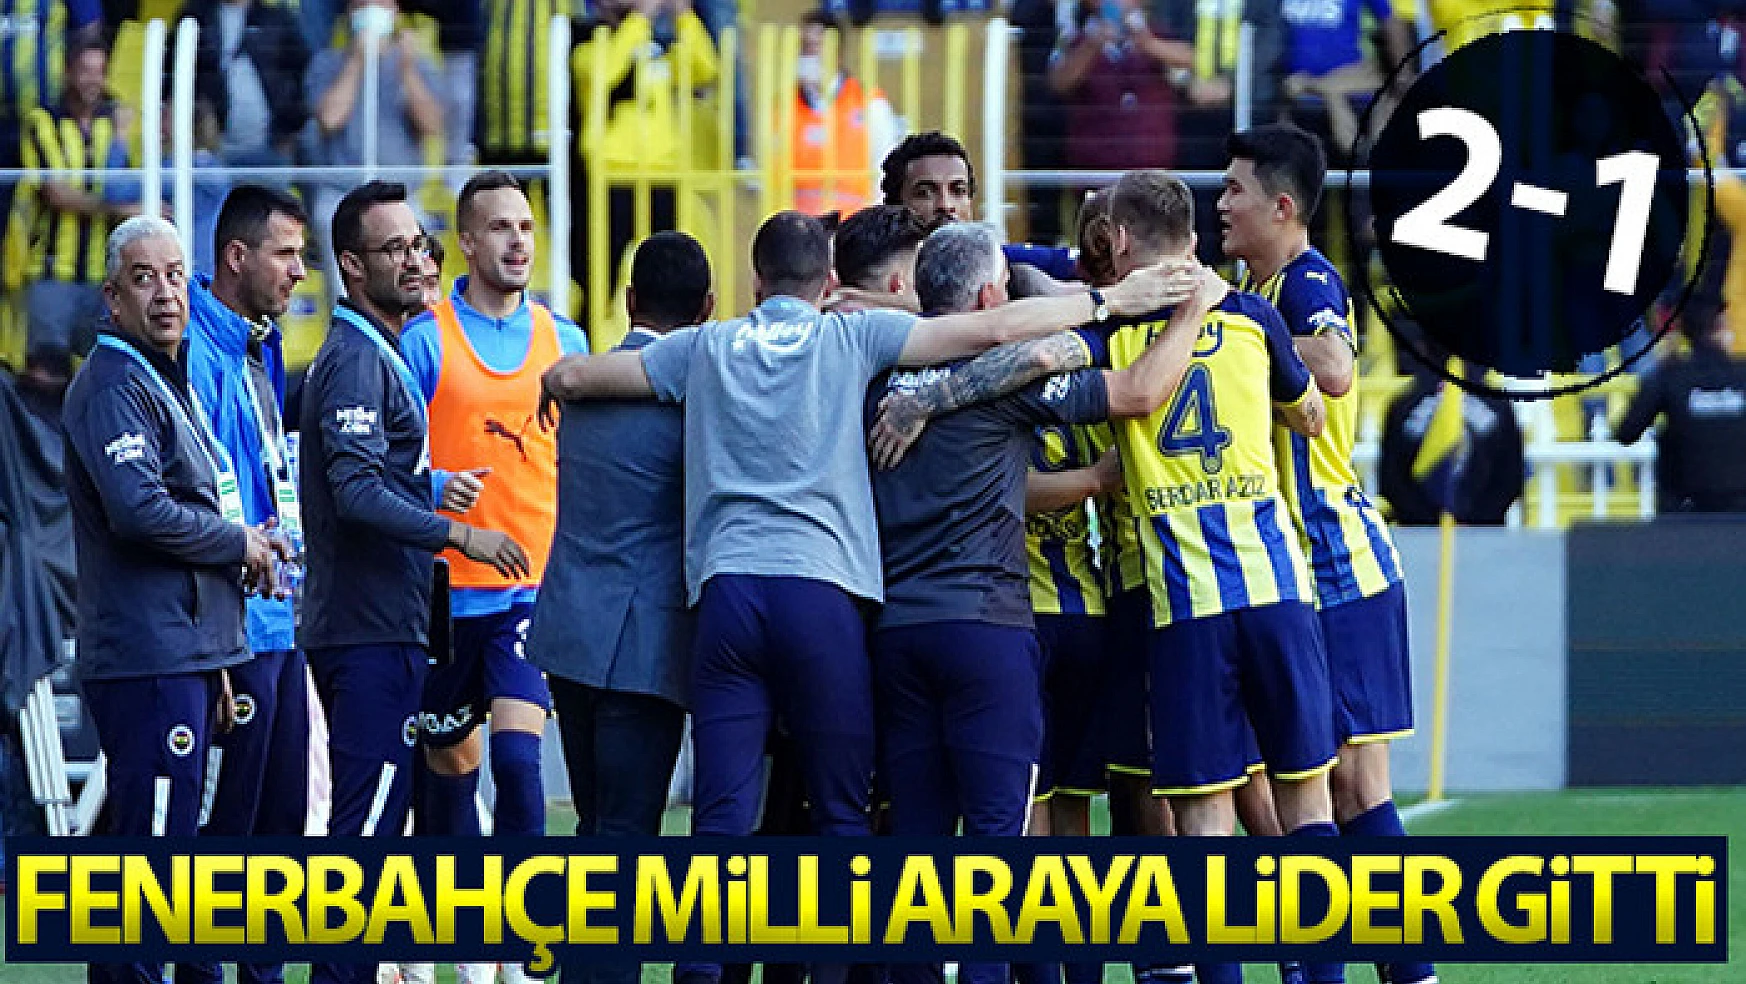 Fenerbahçe milli araya lider gitti